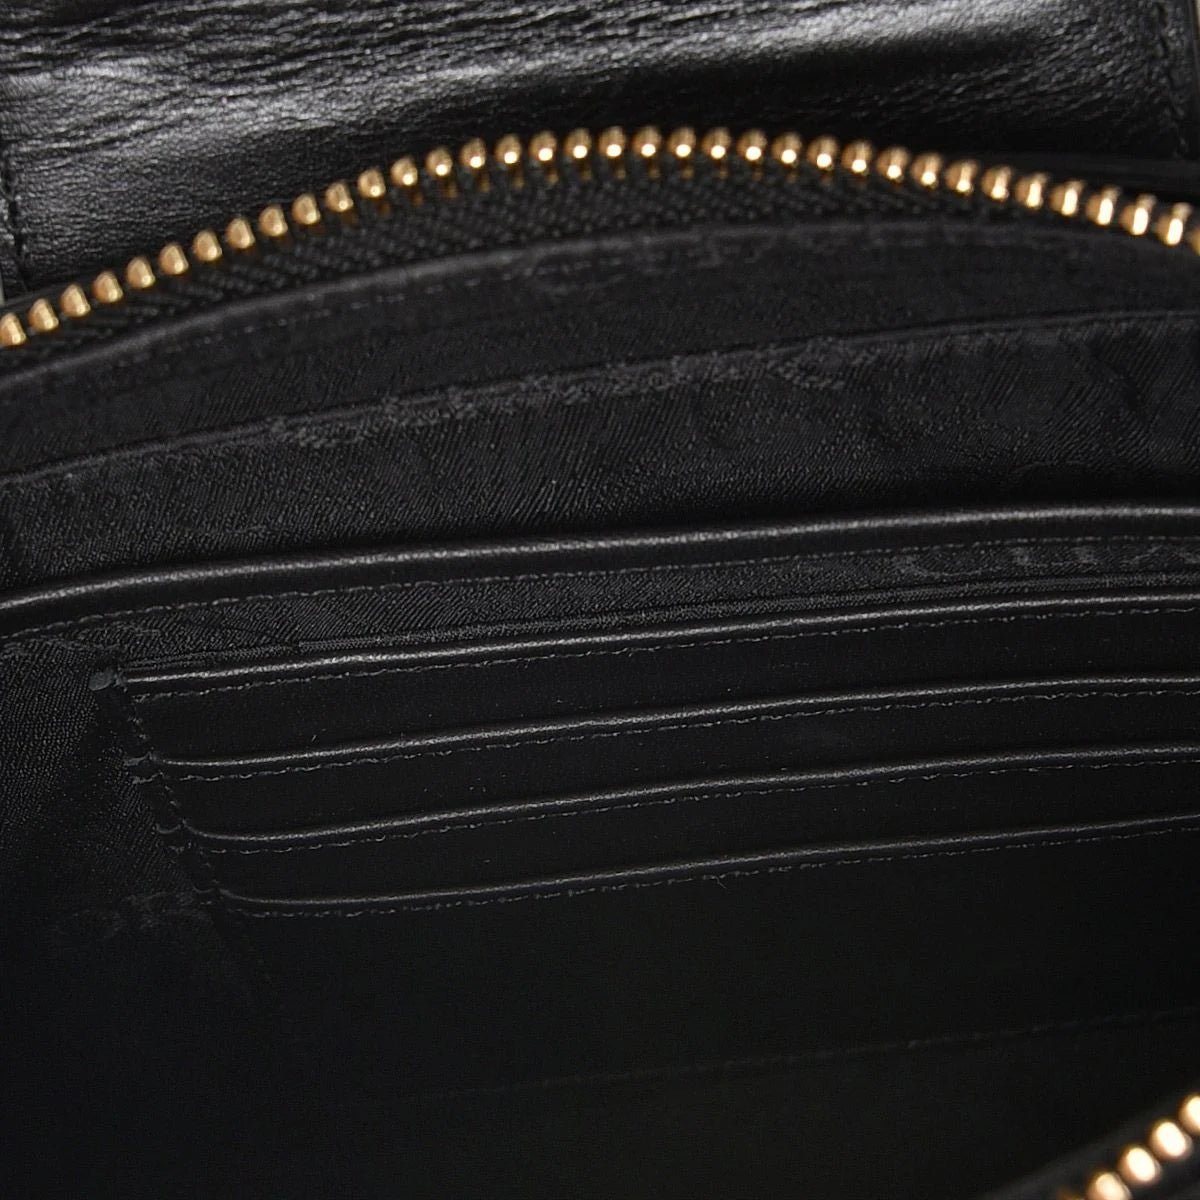 Black exotic leather shoulder bag with handmade interweaving detail